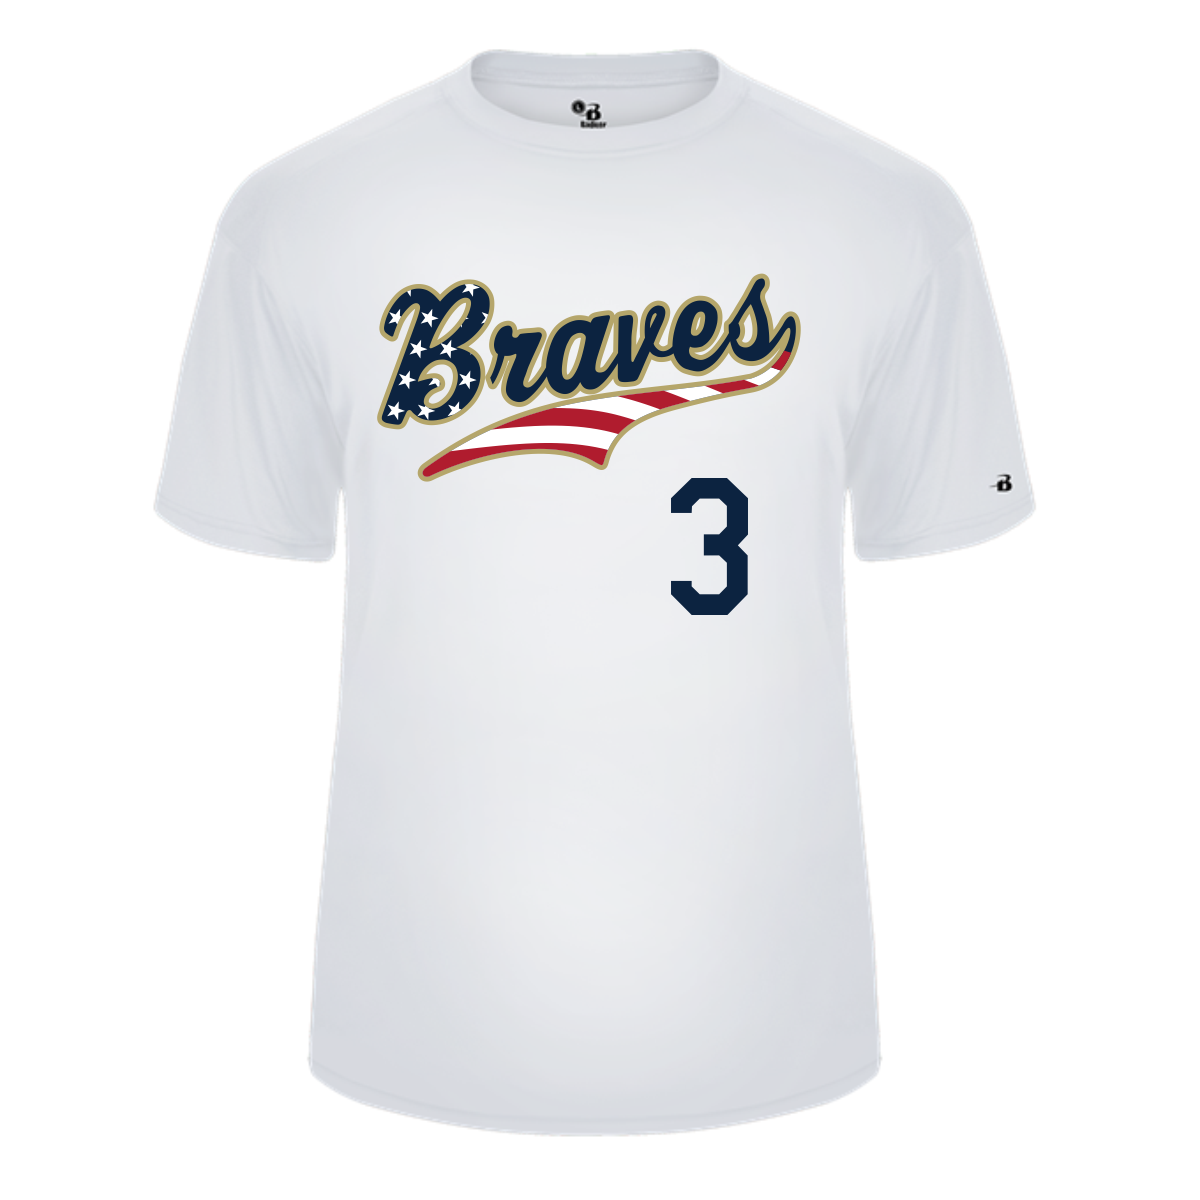 Atlanta Braves T-shirts in Atlanta Braves Team Shop - oggsync.com